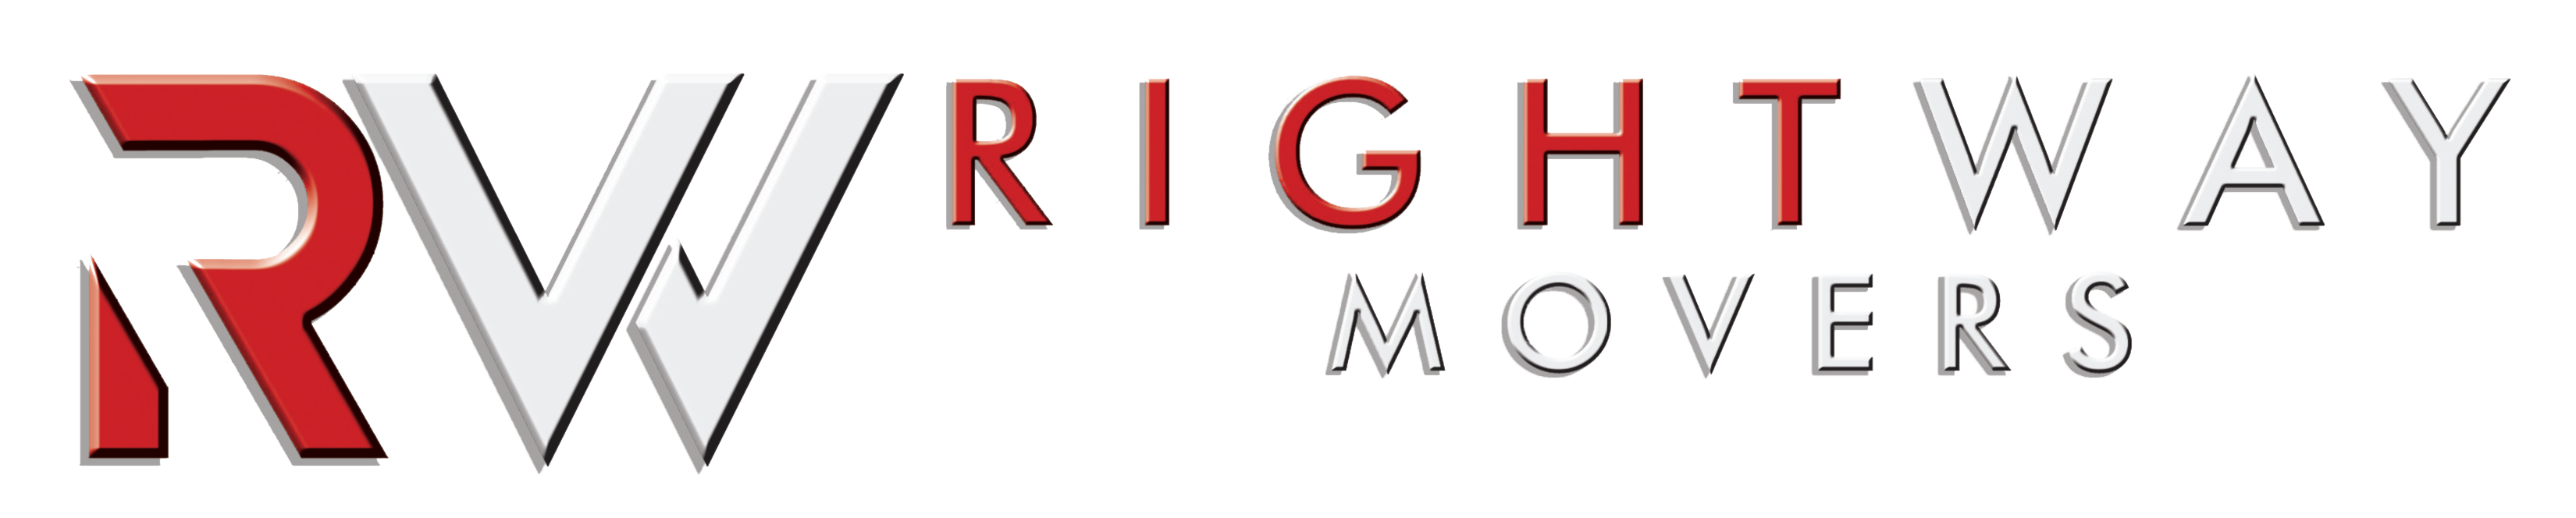 RWM logo copy copy